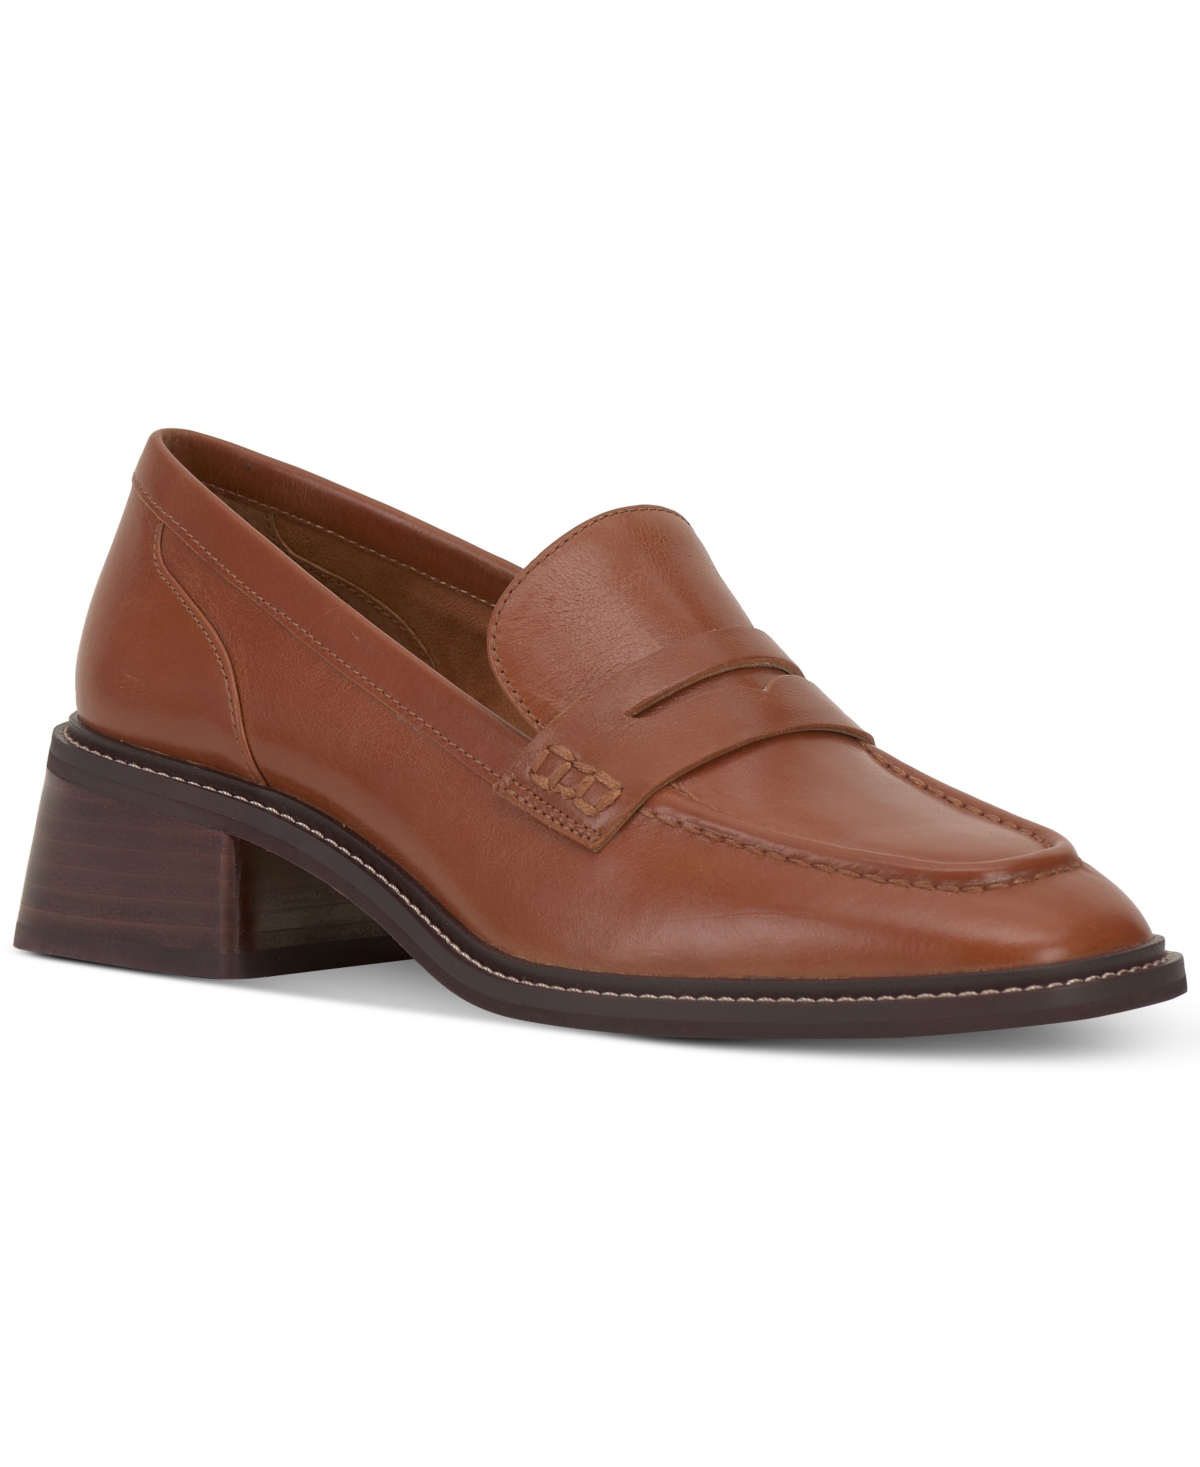 Enachel Block-Heel Tailored Loafer Flats - Dark Taupe